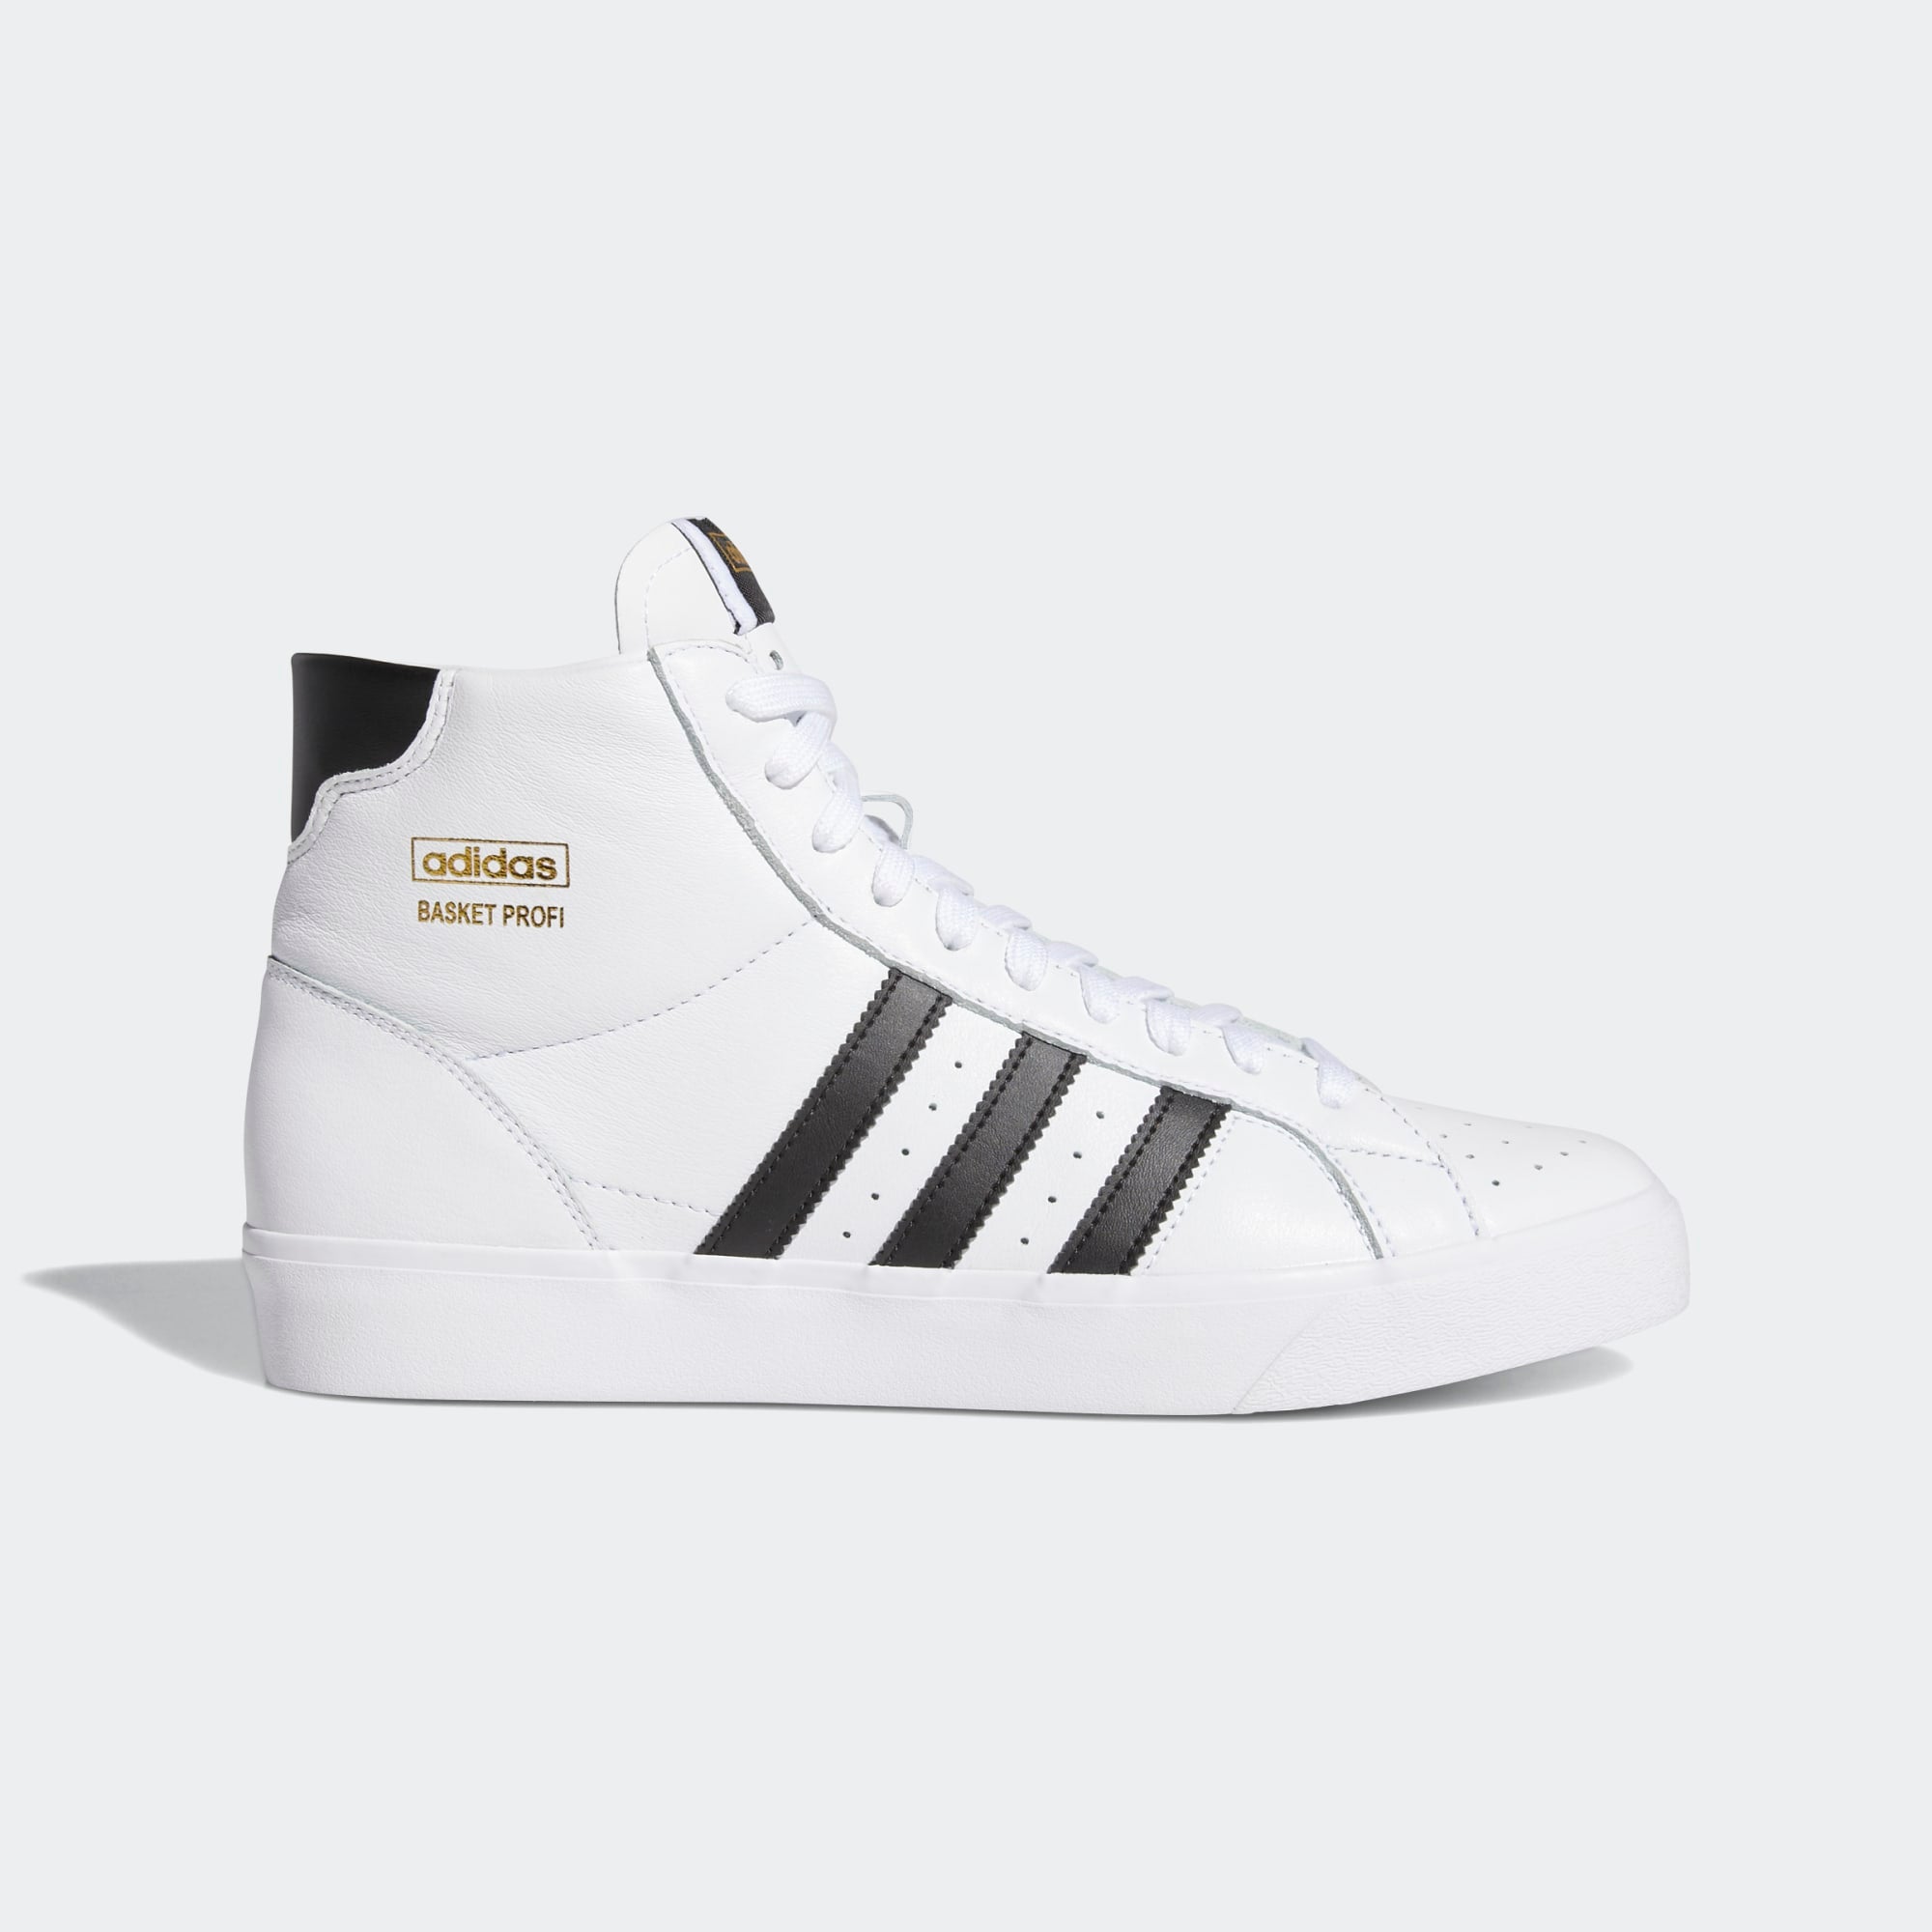 Adidas Originals Basket Profi Shoes White / Black / Gold [FW3108] | Find Sole